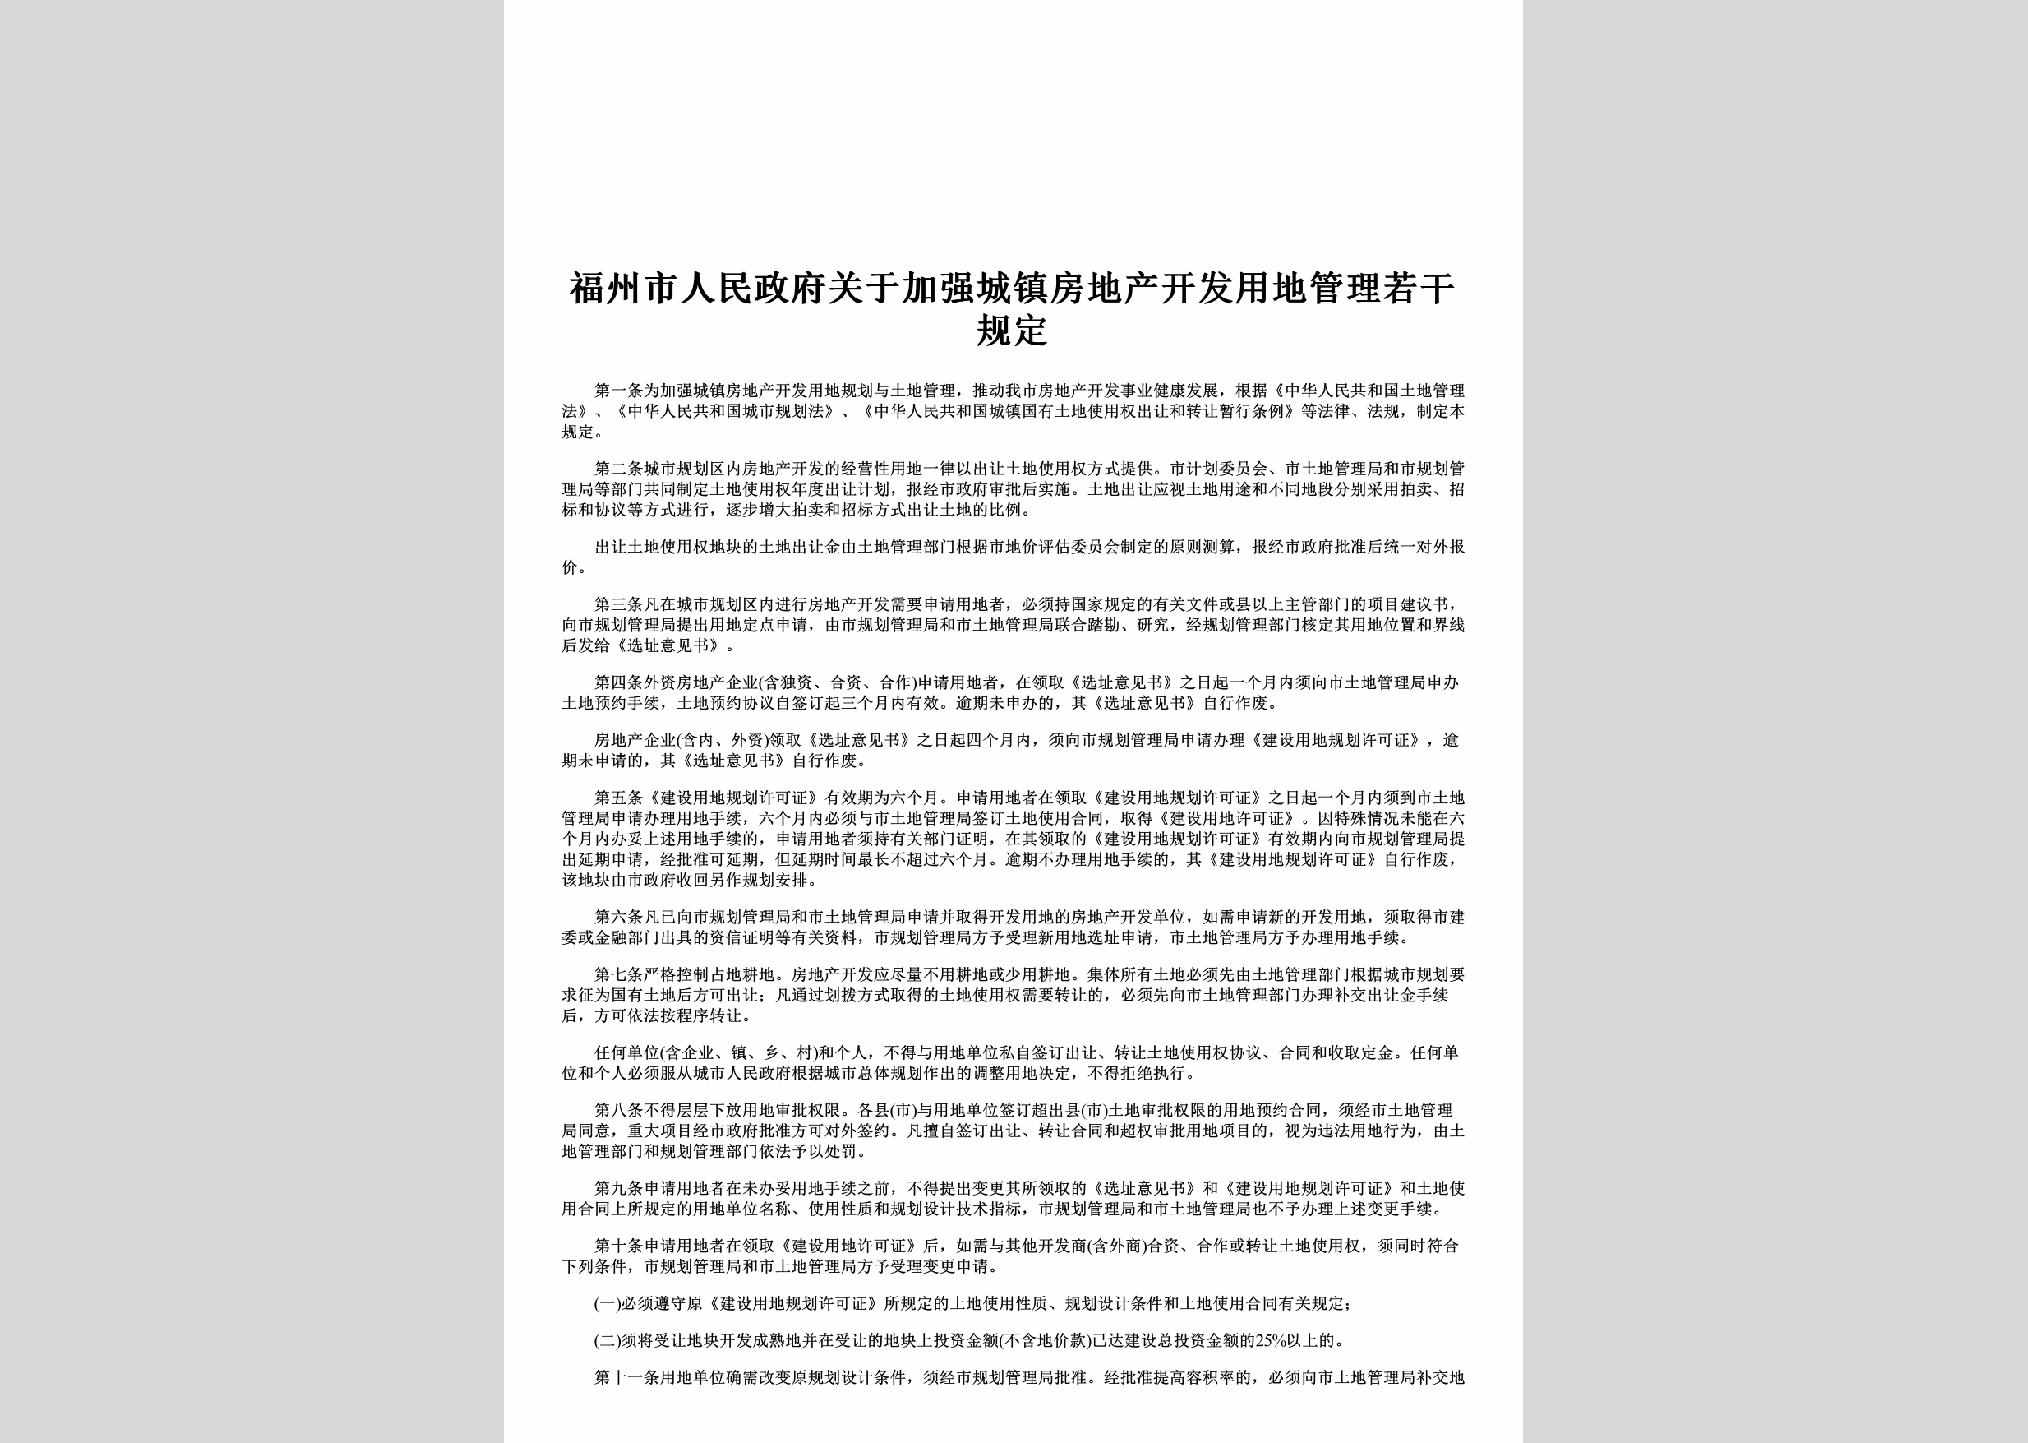 FJ-FZDCKFGL-1993：福州市人民政府关于加强城镇房地产开发用地管理若干规定